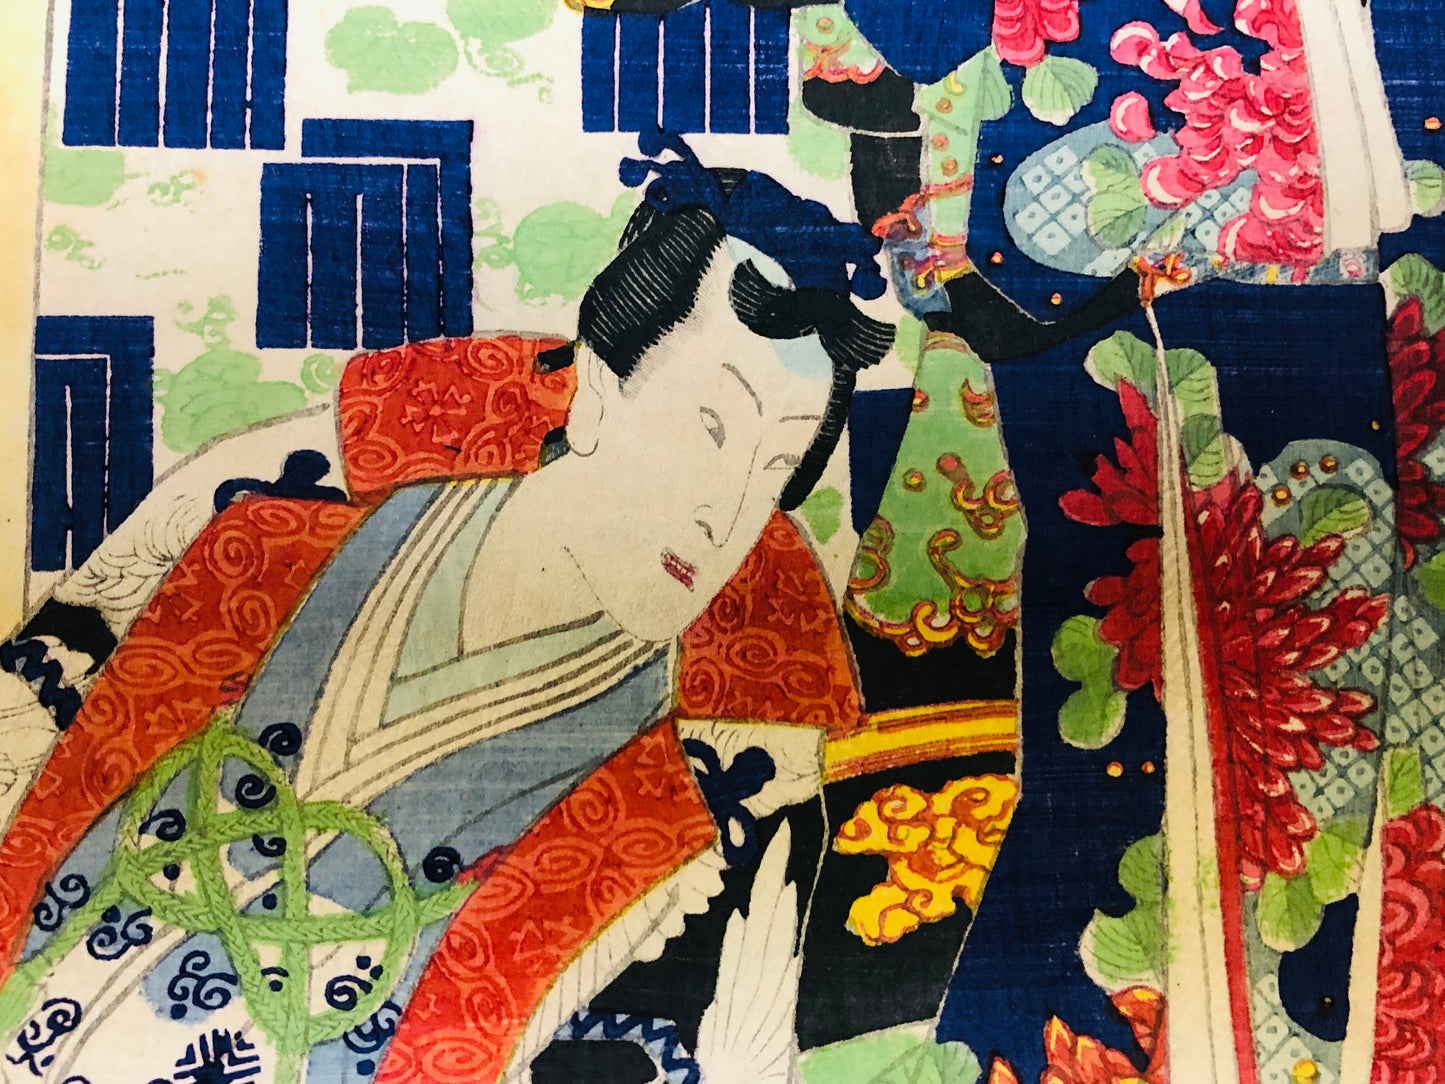 Y6175 [VIDEO] WOODBLOCK PRINT Kuniteru 2 sheets Japan Ukiyoe antique art interior